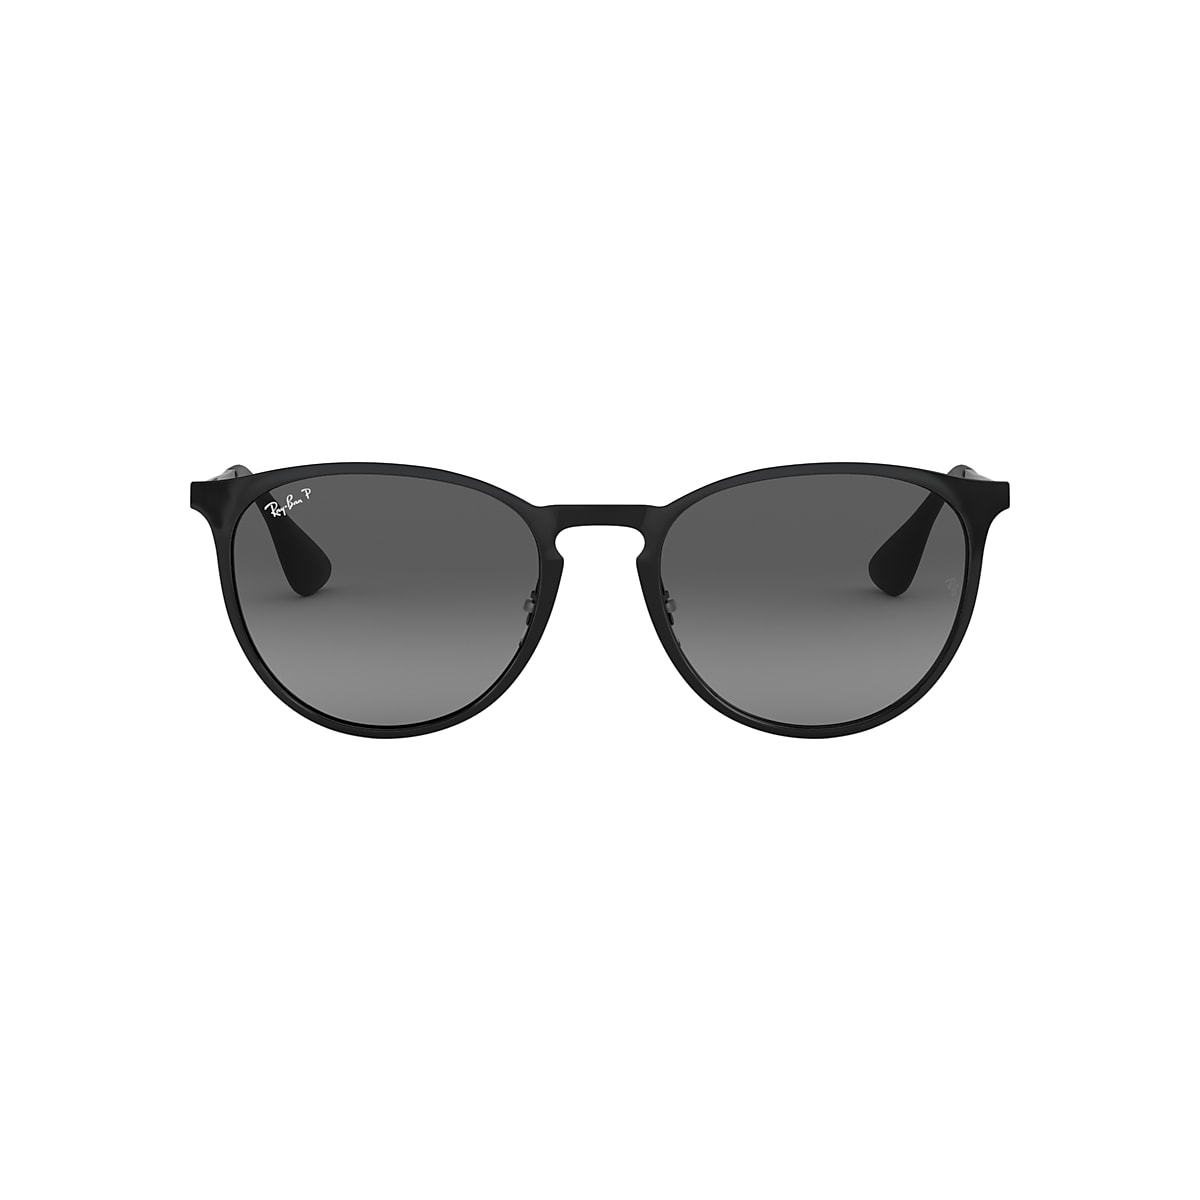 Ray-Ban Sunglasses Black Target Optical